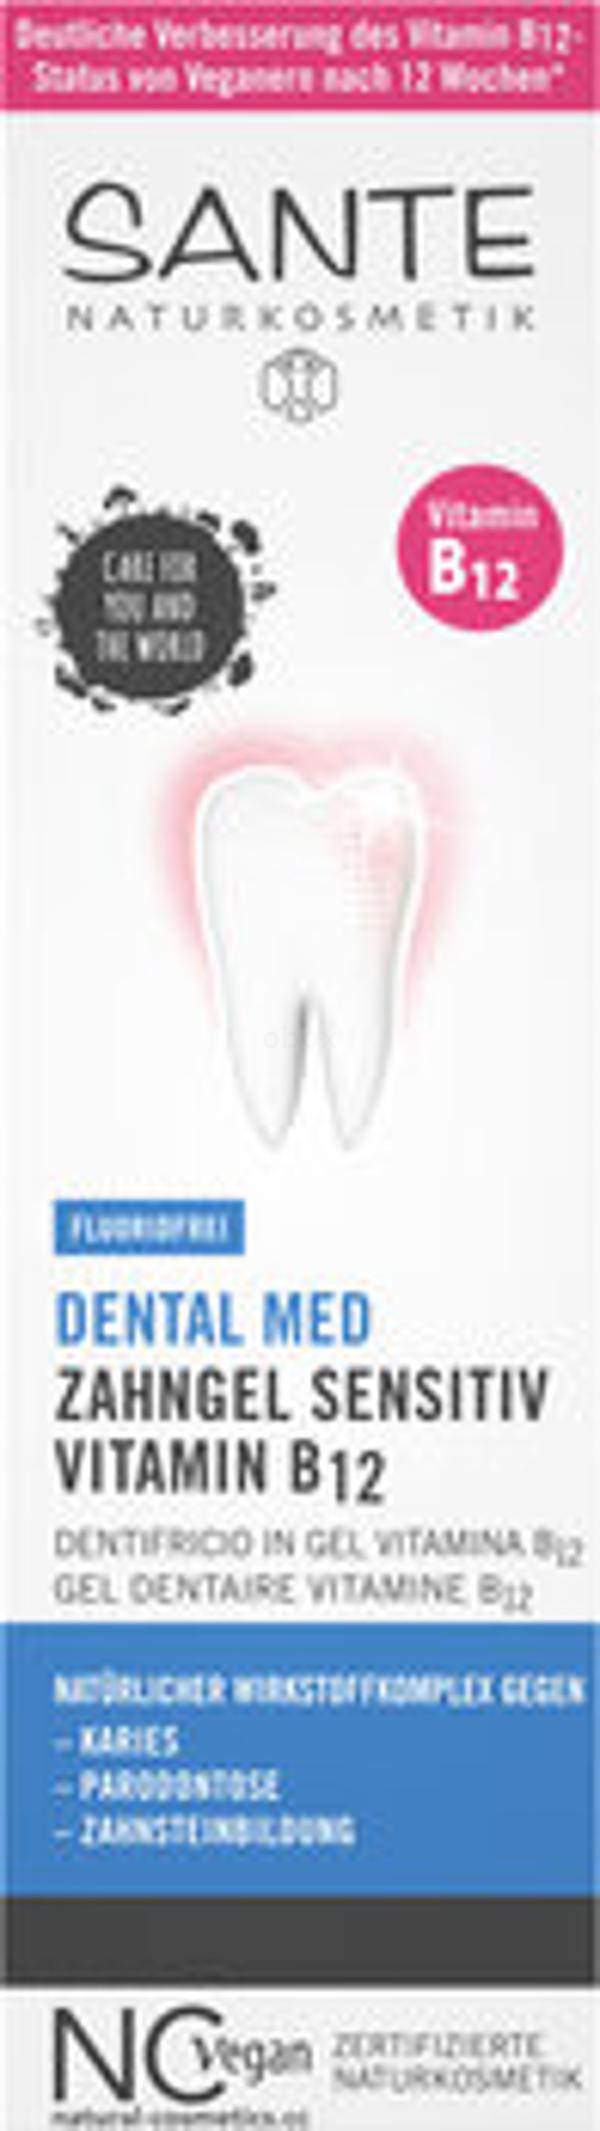 Produktfoto zu Zahngel sensitiv mit Vitamin B12 ohne Fluorid, 75 ml